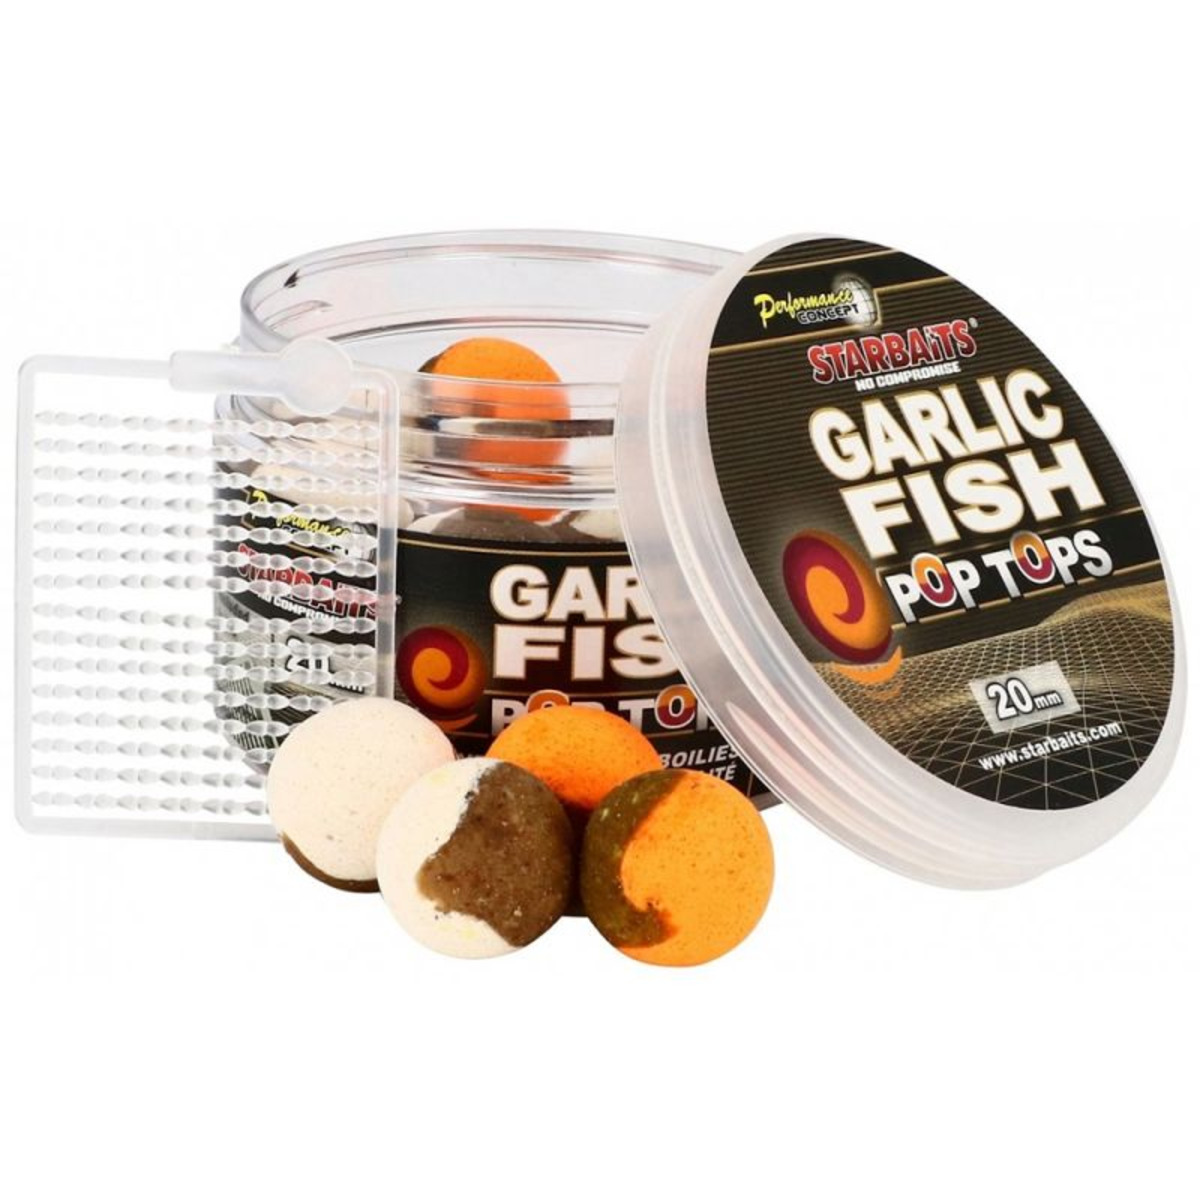 Starbaits Garlic Fish Pop Top - 20 mm - 60 g